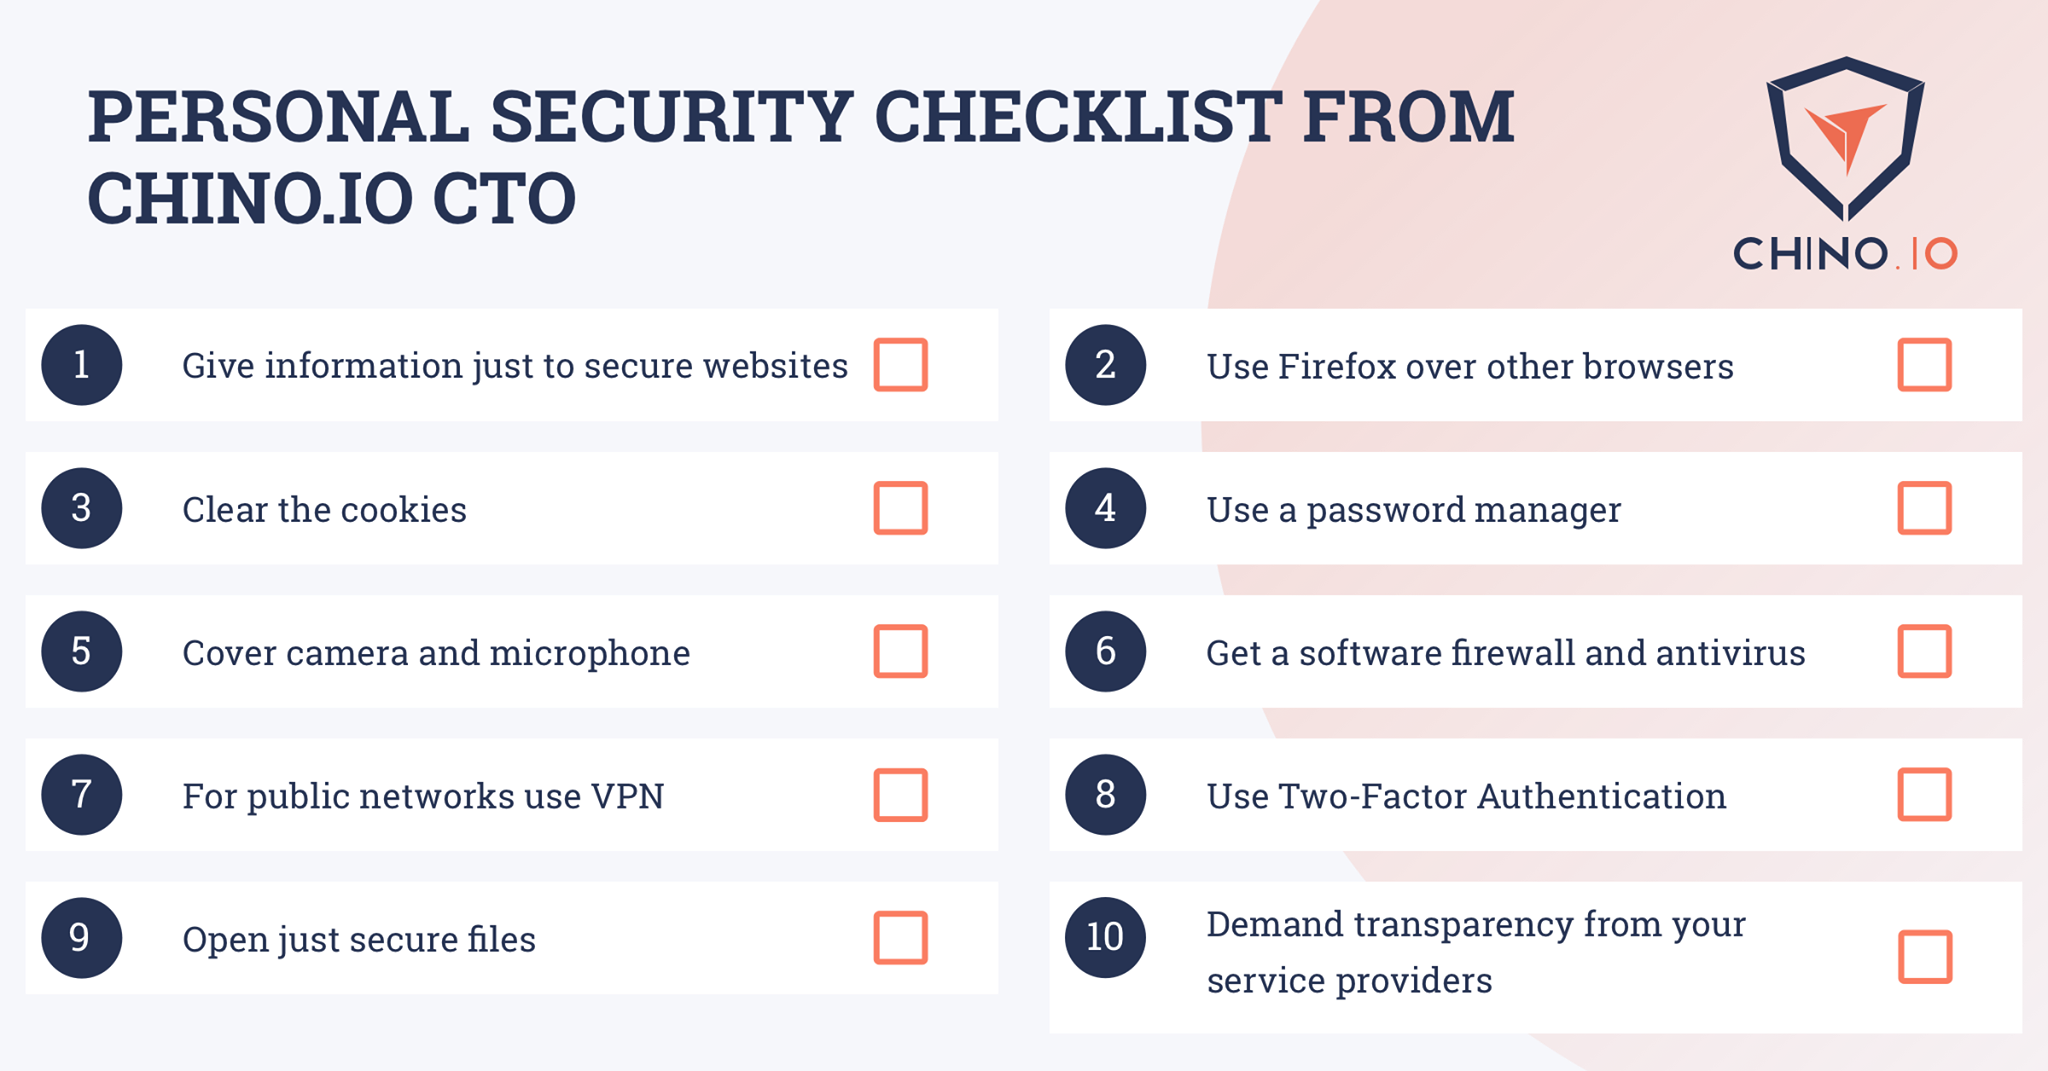 Security-checklist-chino.io-2